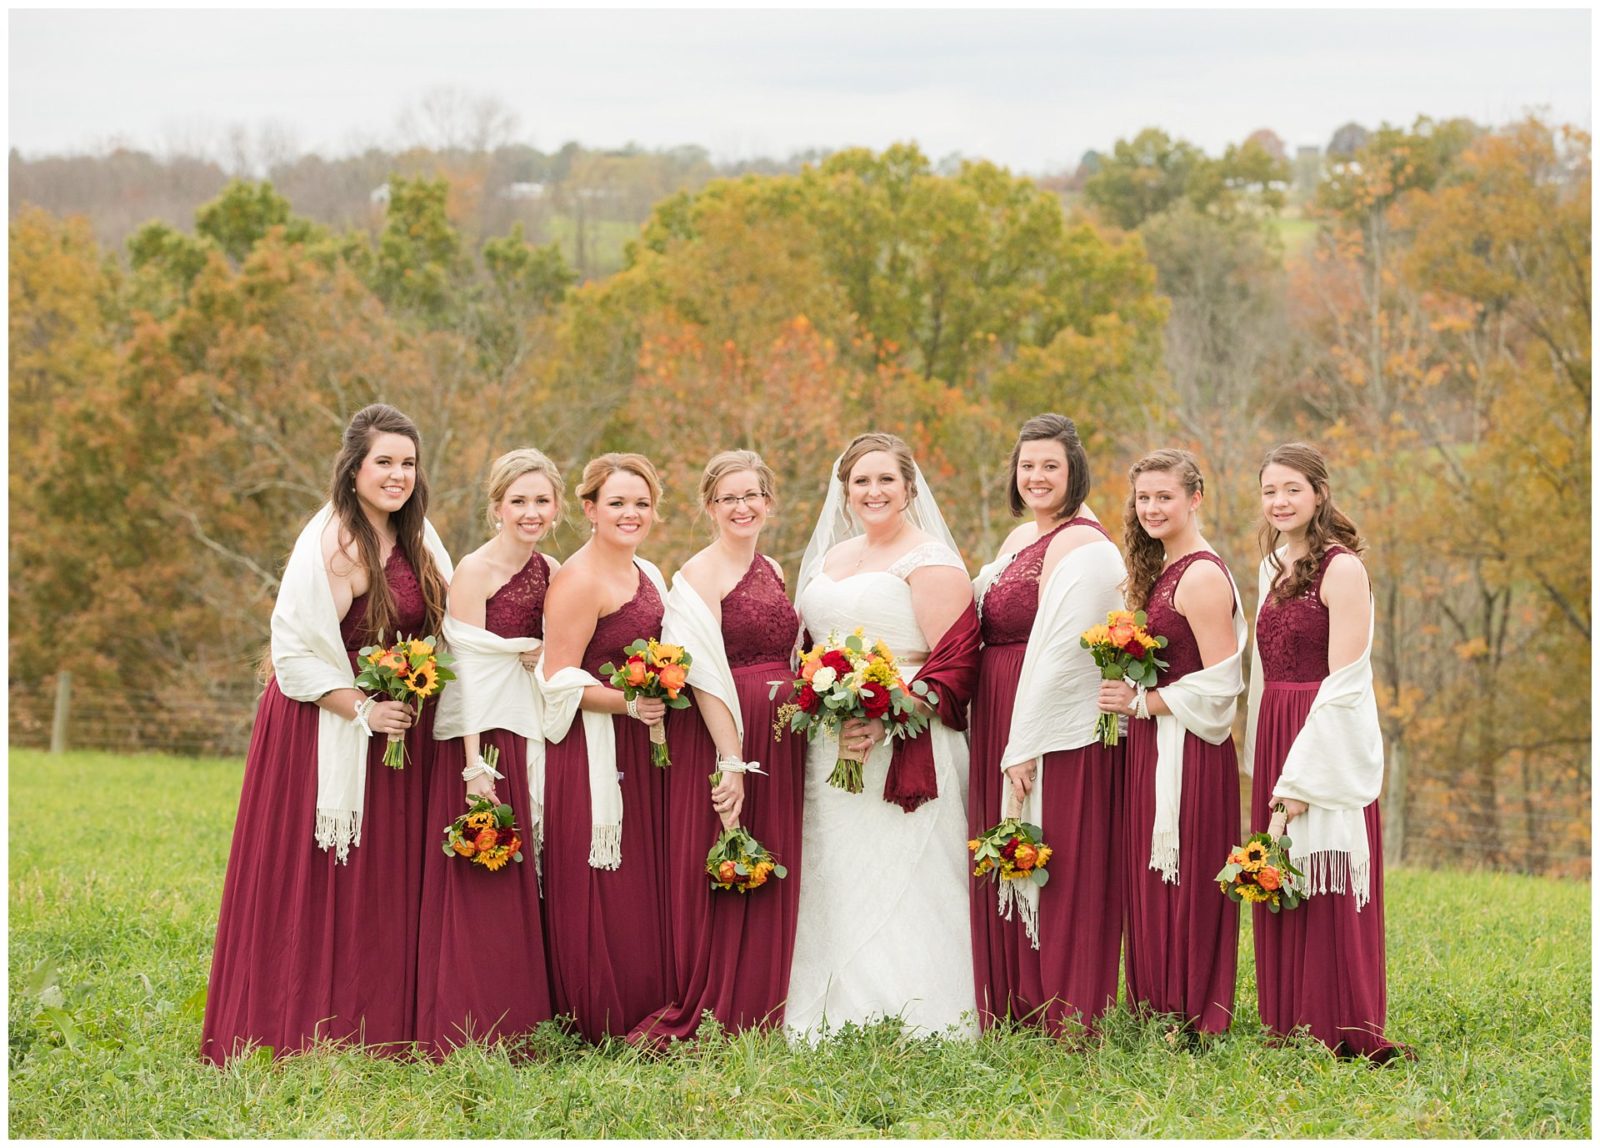 Fall bridesmaid wedding photos at Honey Locust Farms in Morning View, Kentucky.